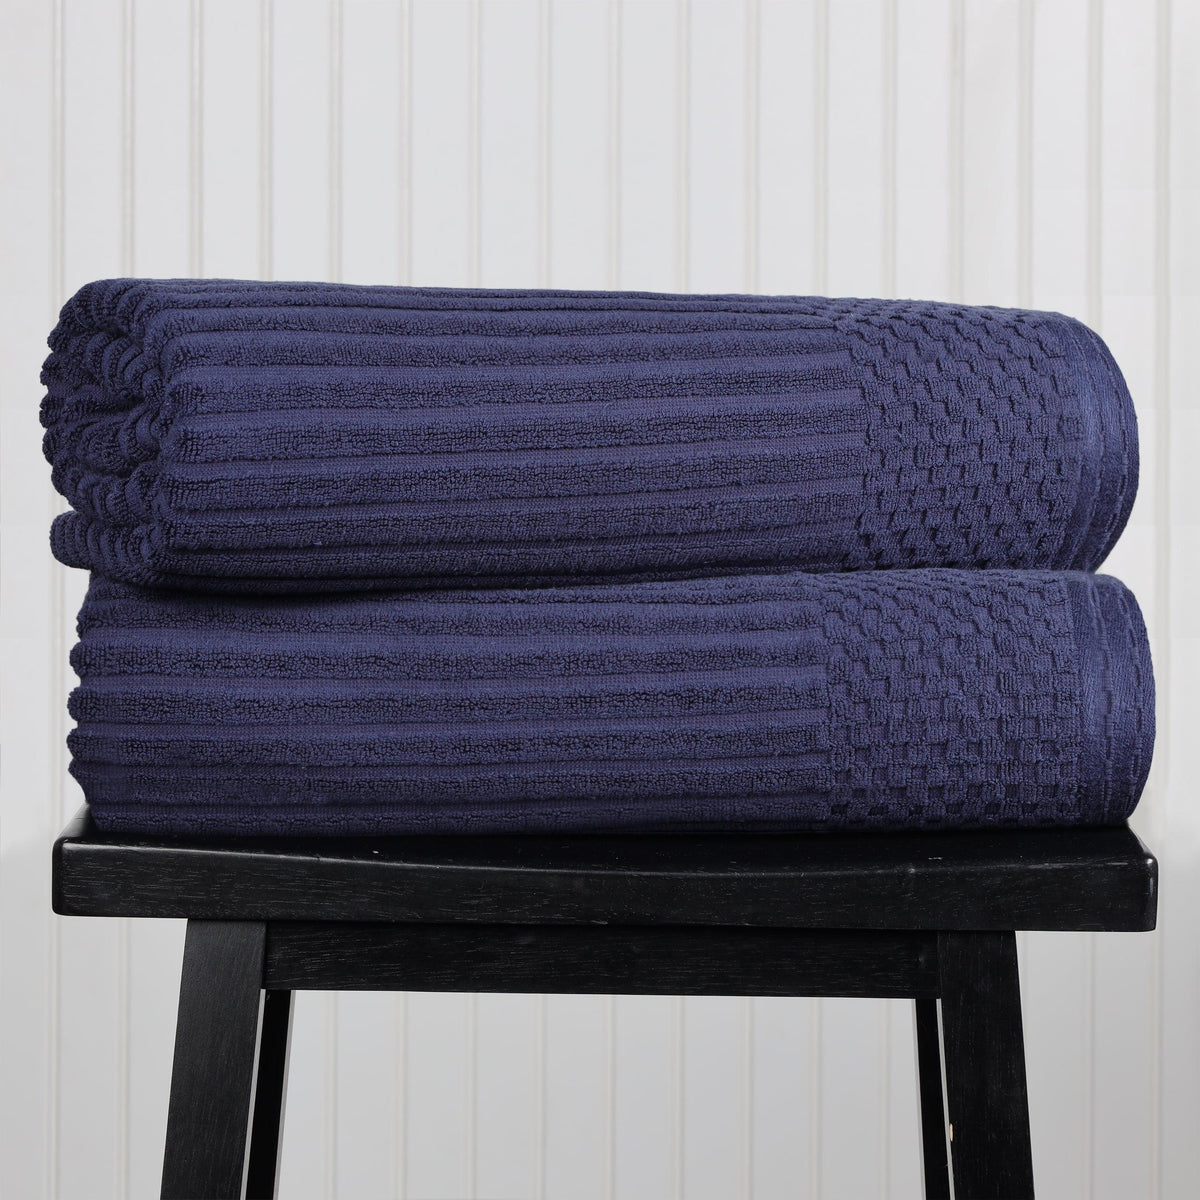 Ribbed Textured Cotton Bath Sheet Ultra-Absorbent Towel Set - Navy Blue